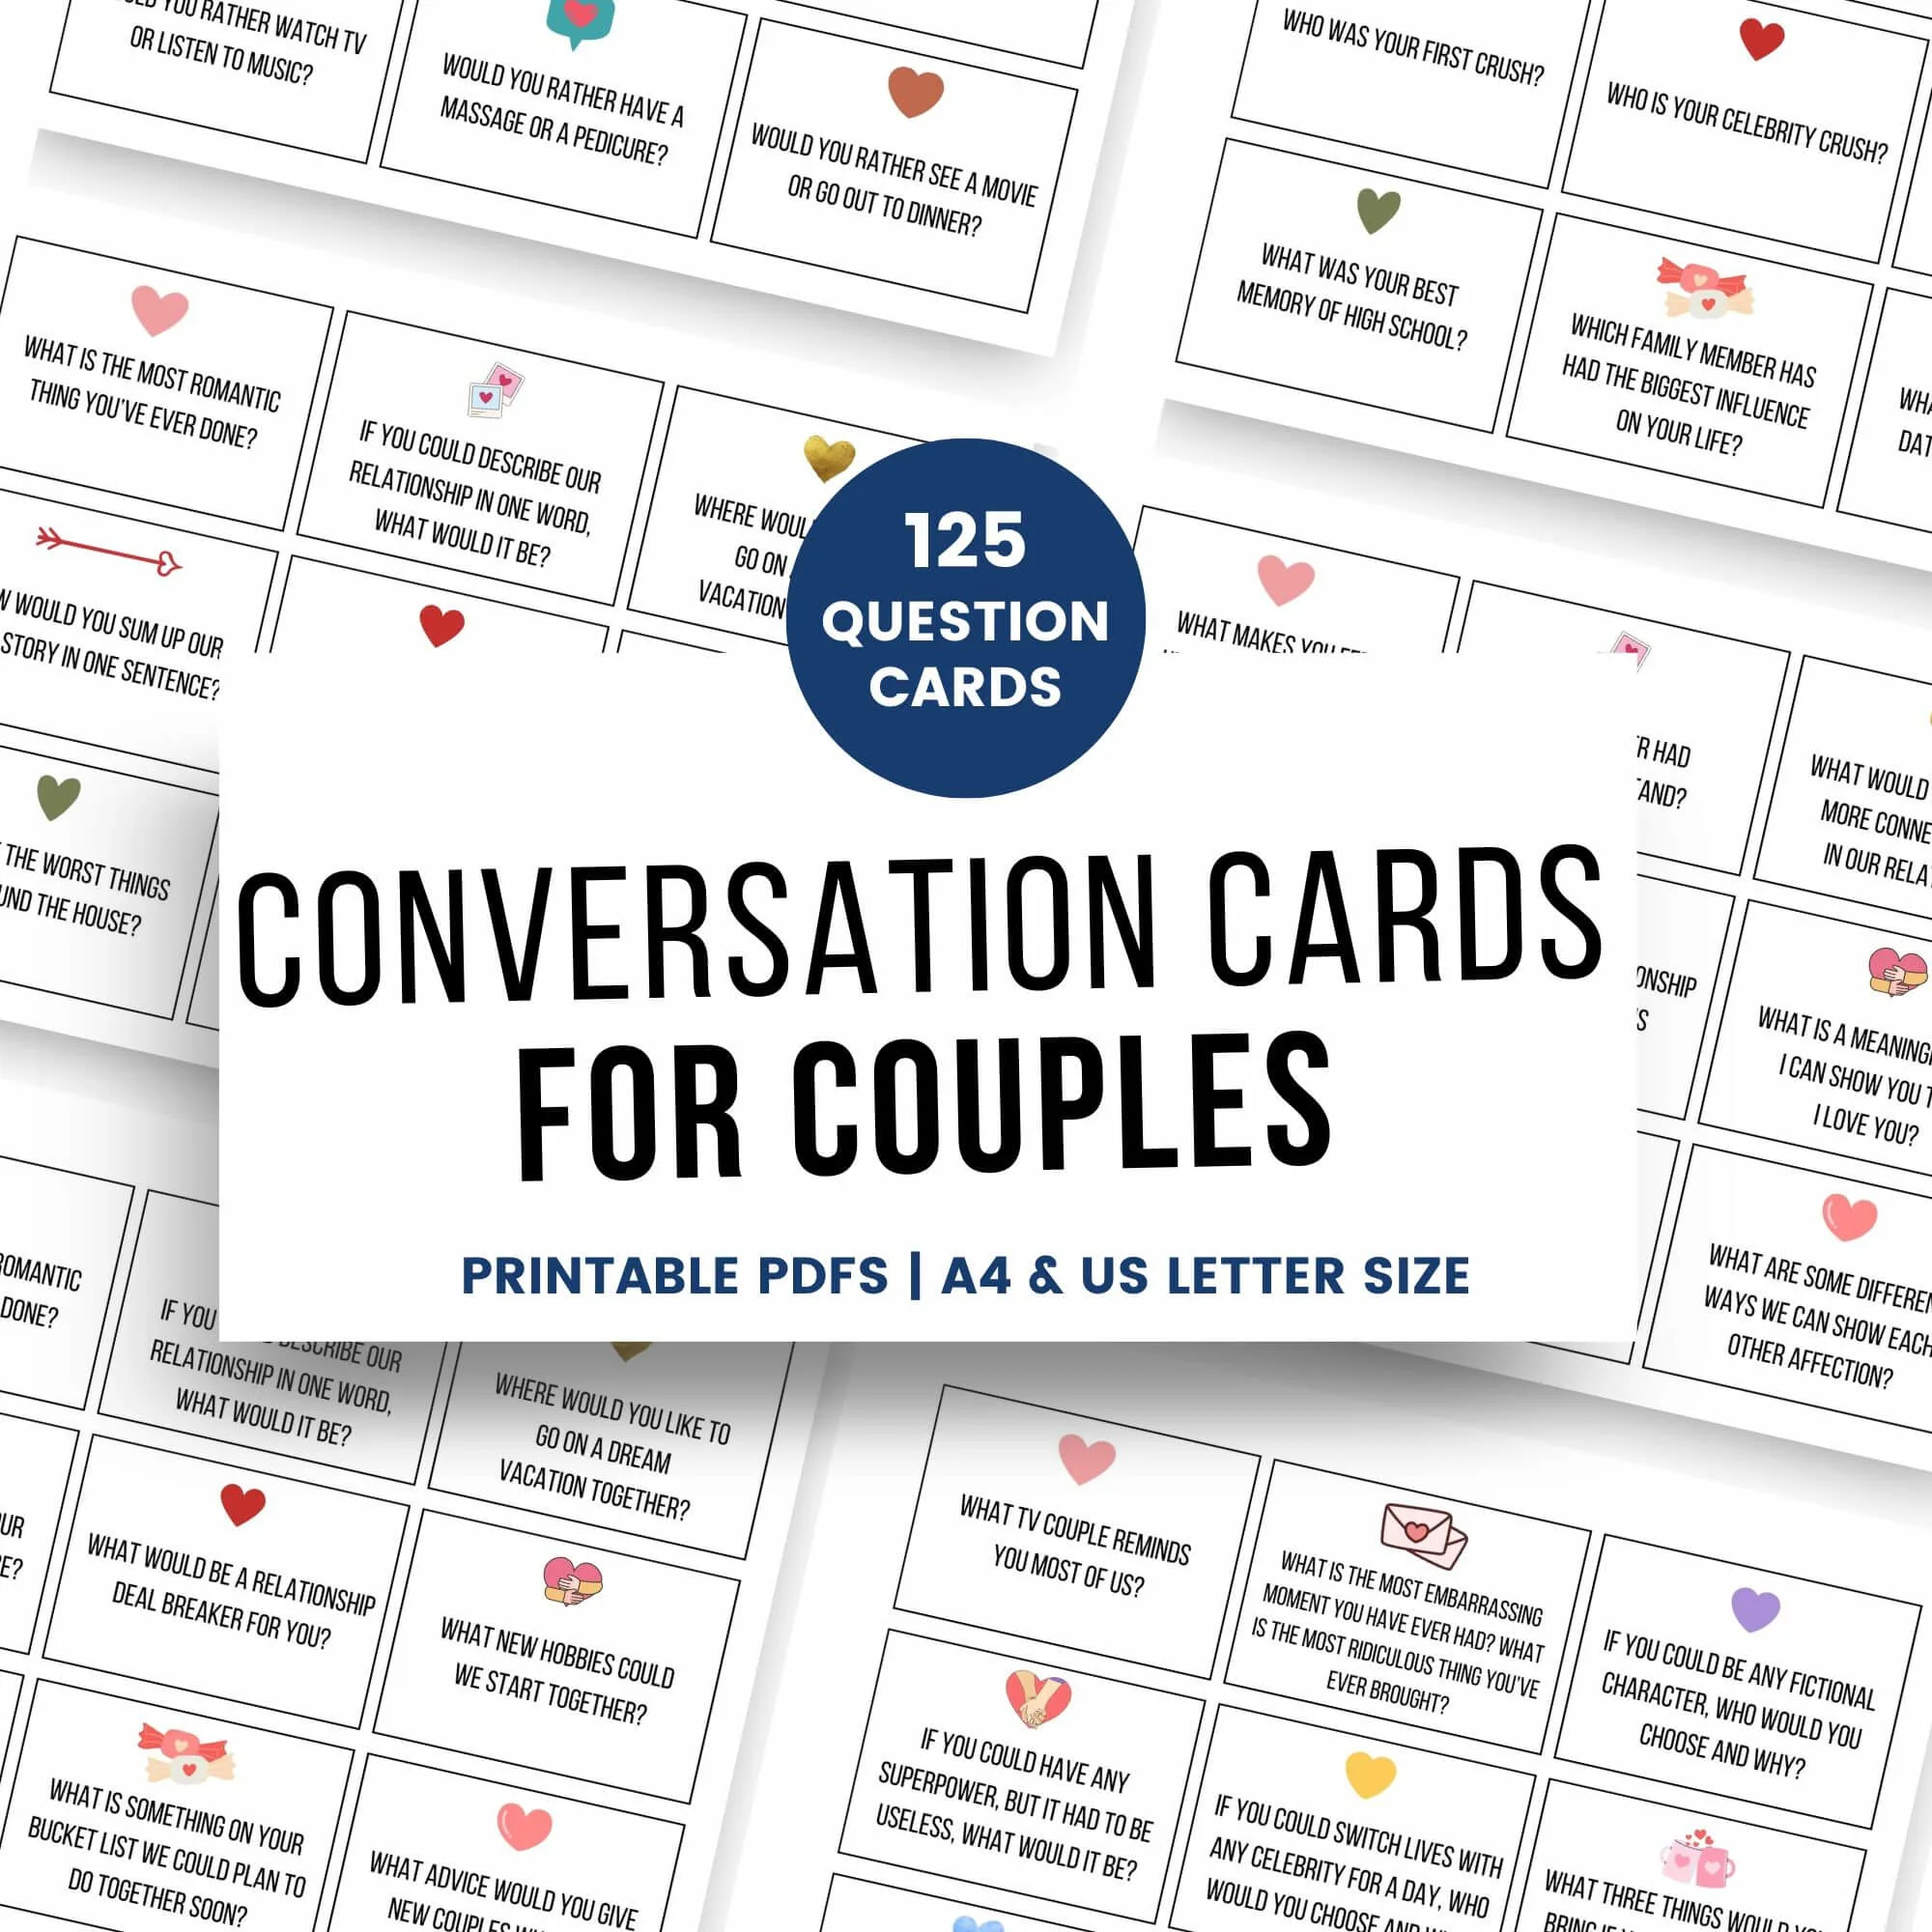 Conversation cards for couples shop banner